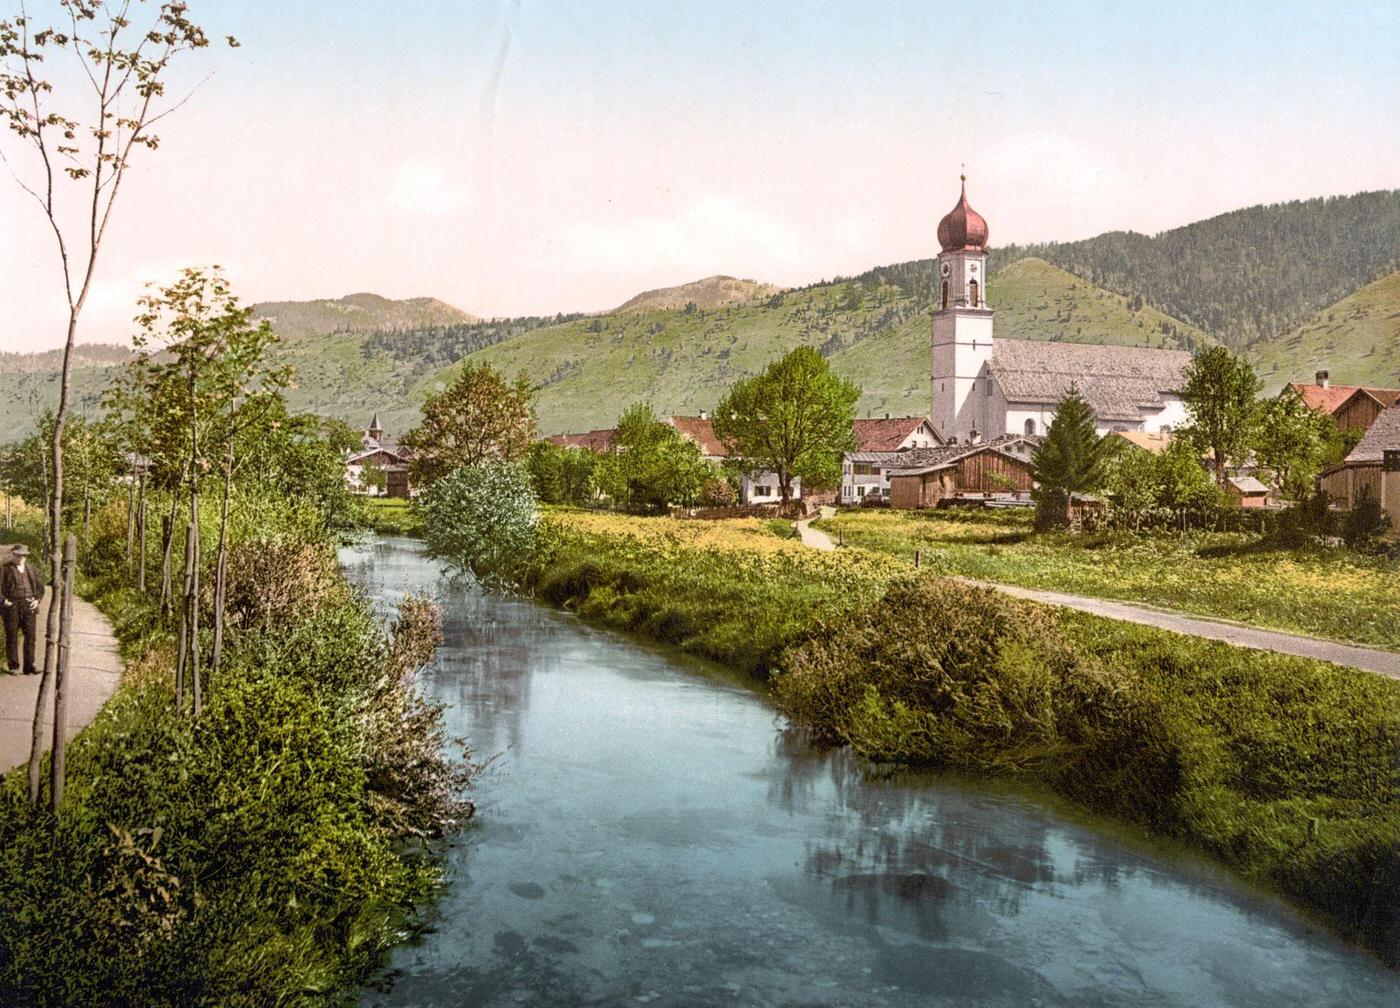 Scene on the Ammer, Oberammergau, Upper Bavaria, Germany, 1890.